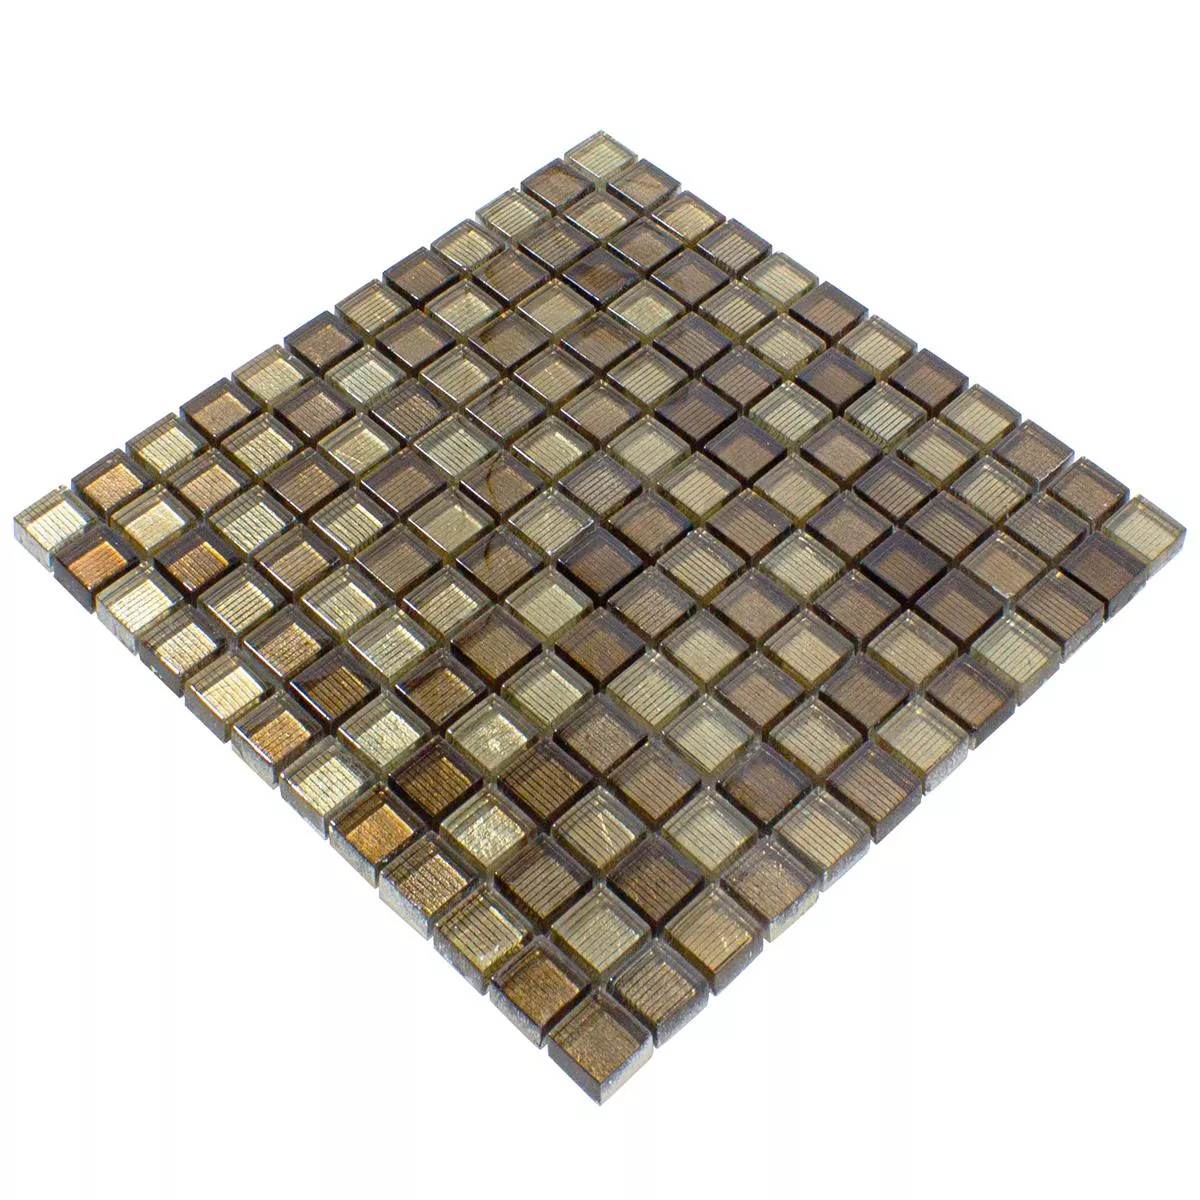 Glass Mosaic Tiles Tyson Structured Bronze